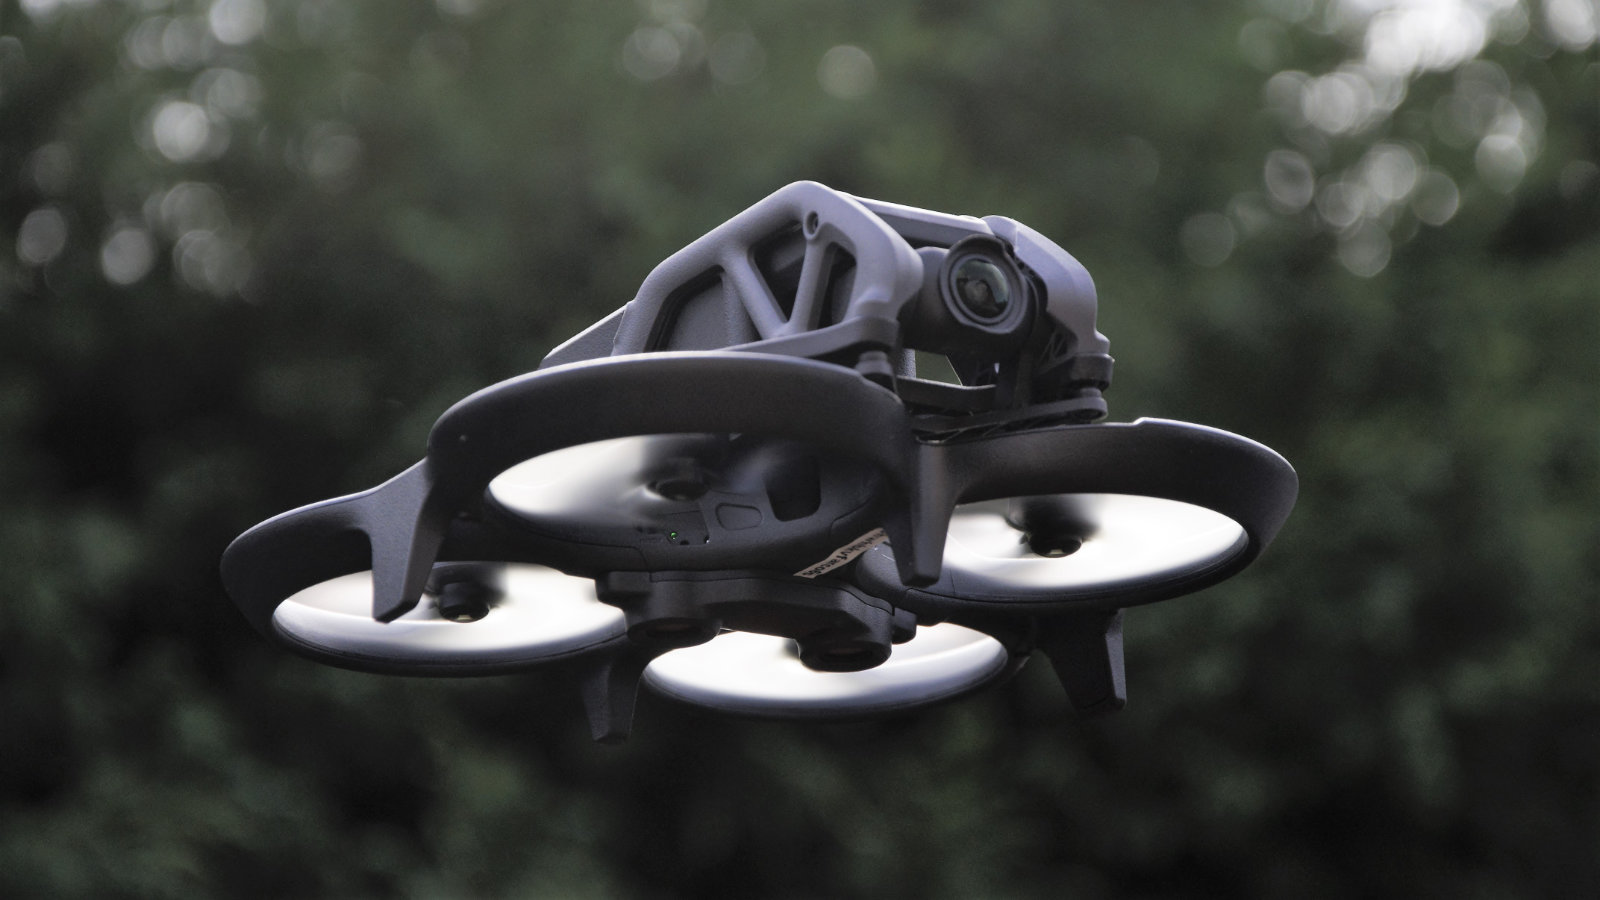 DJI Avata drone with 48MP CMOS sensor, 155° FOV announced